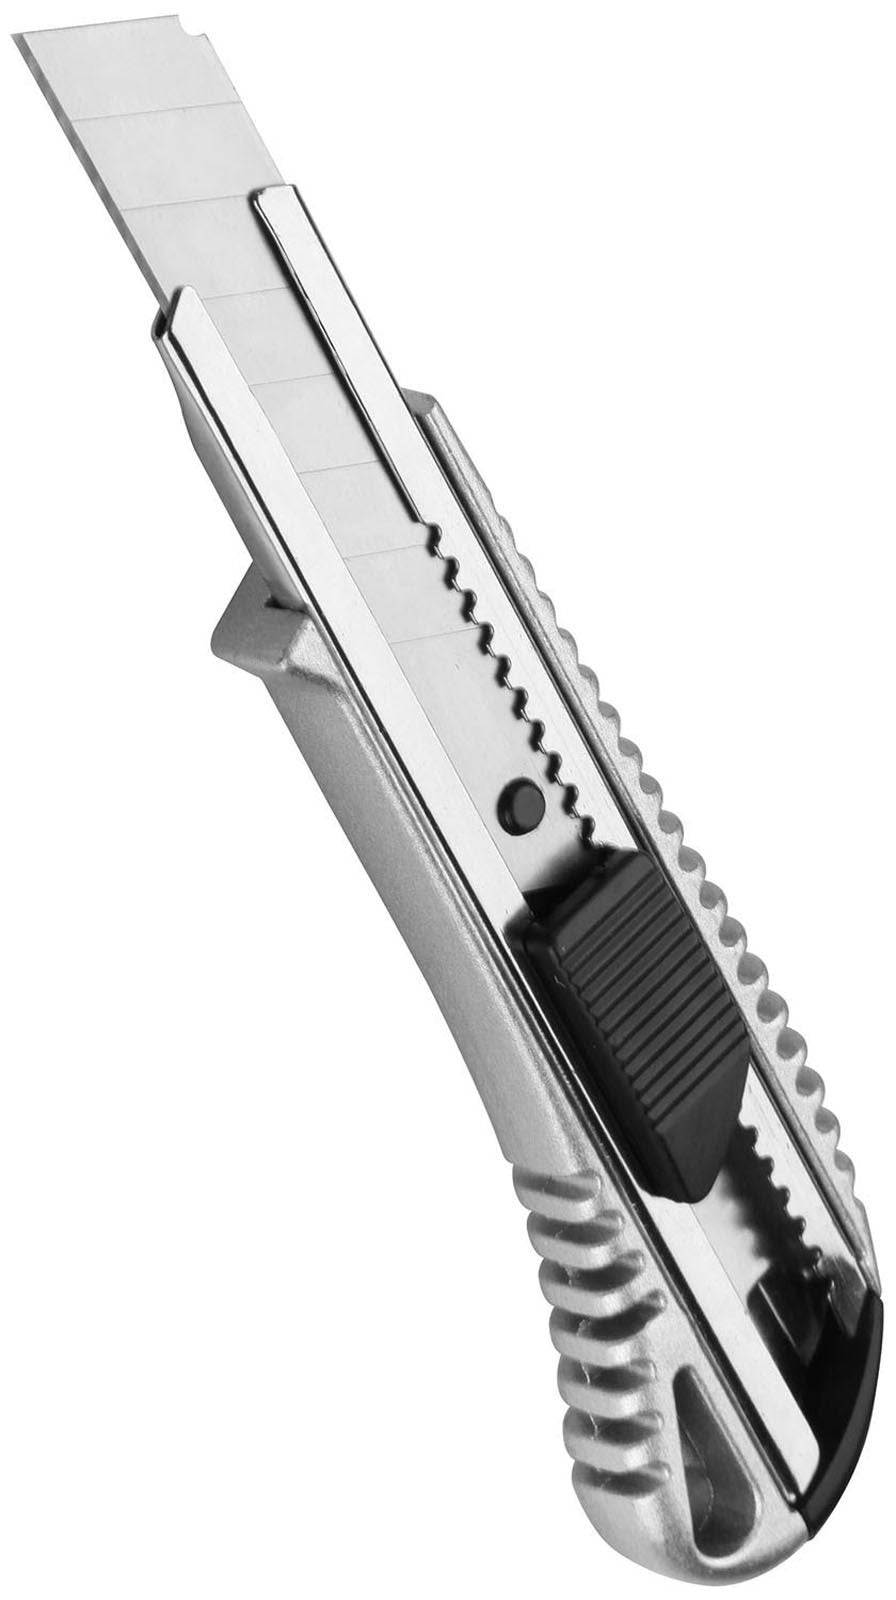 Wokin Aluminum Case Snap Off Blade Knife